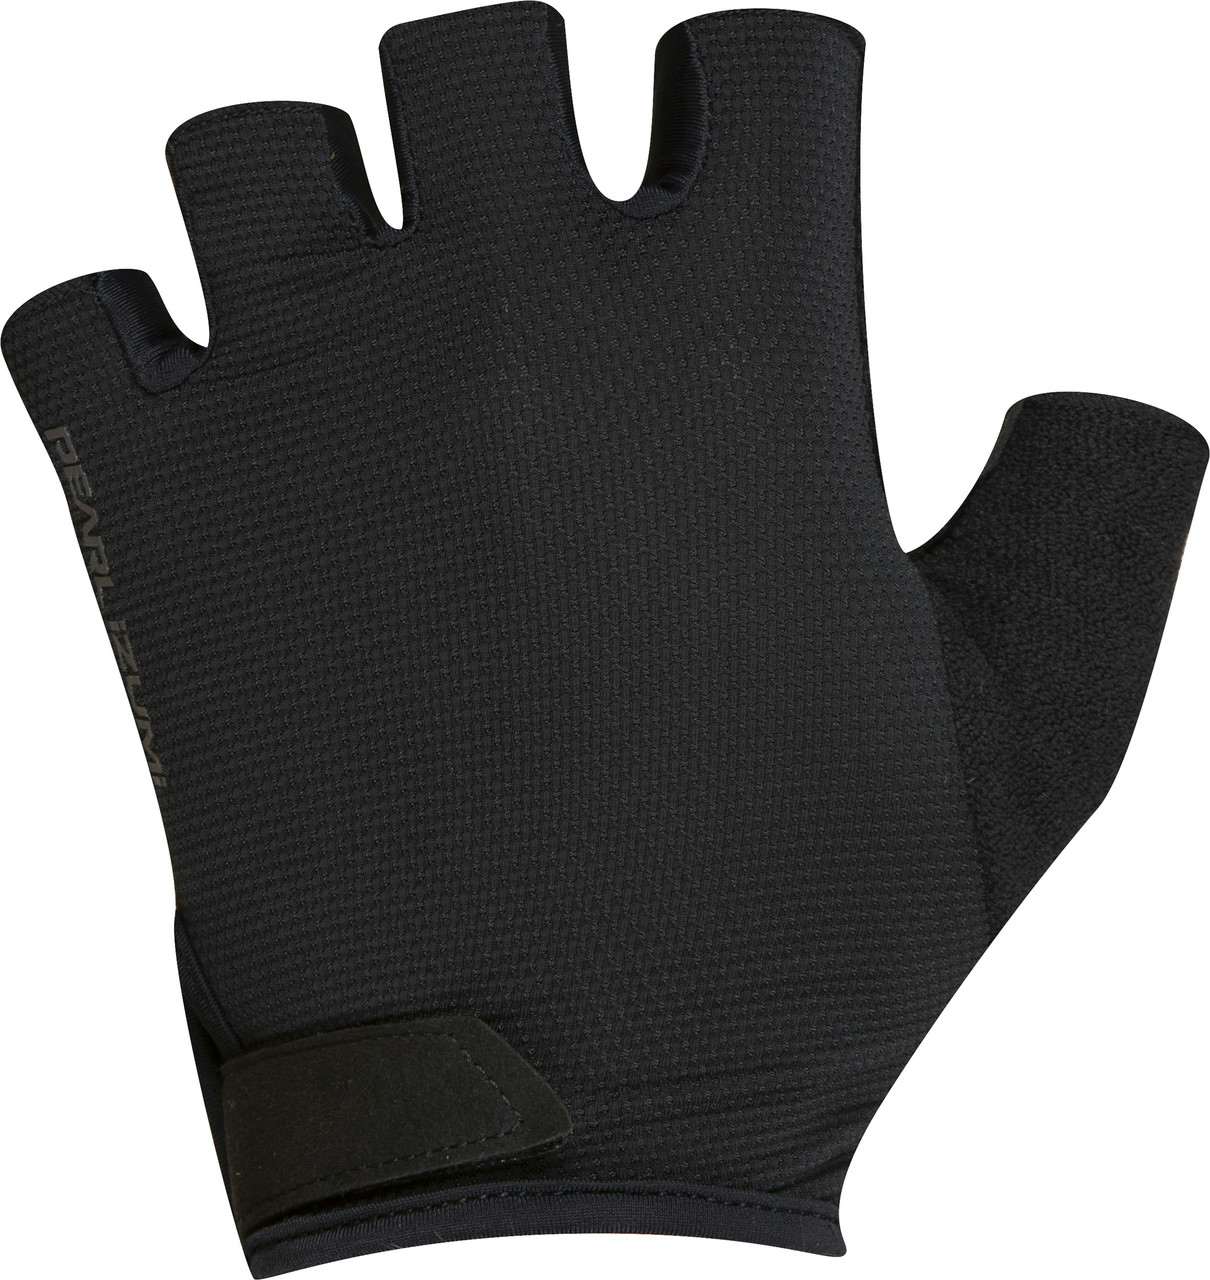 Quest Gel Gloves Black